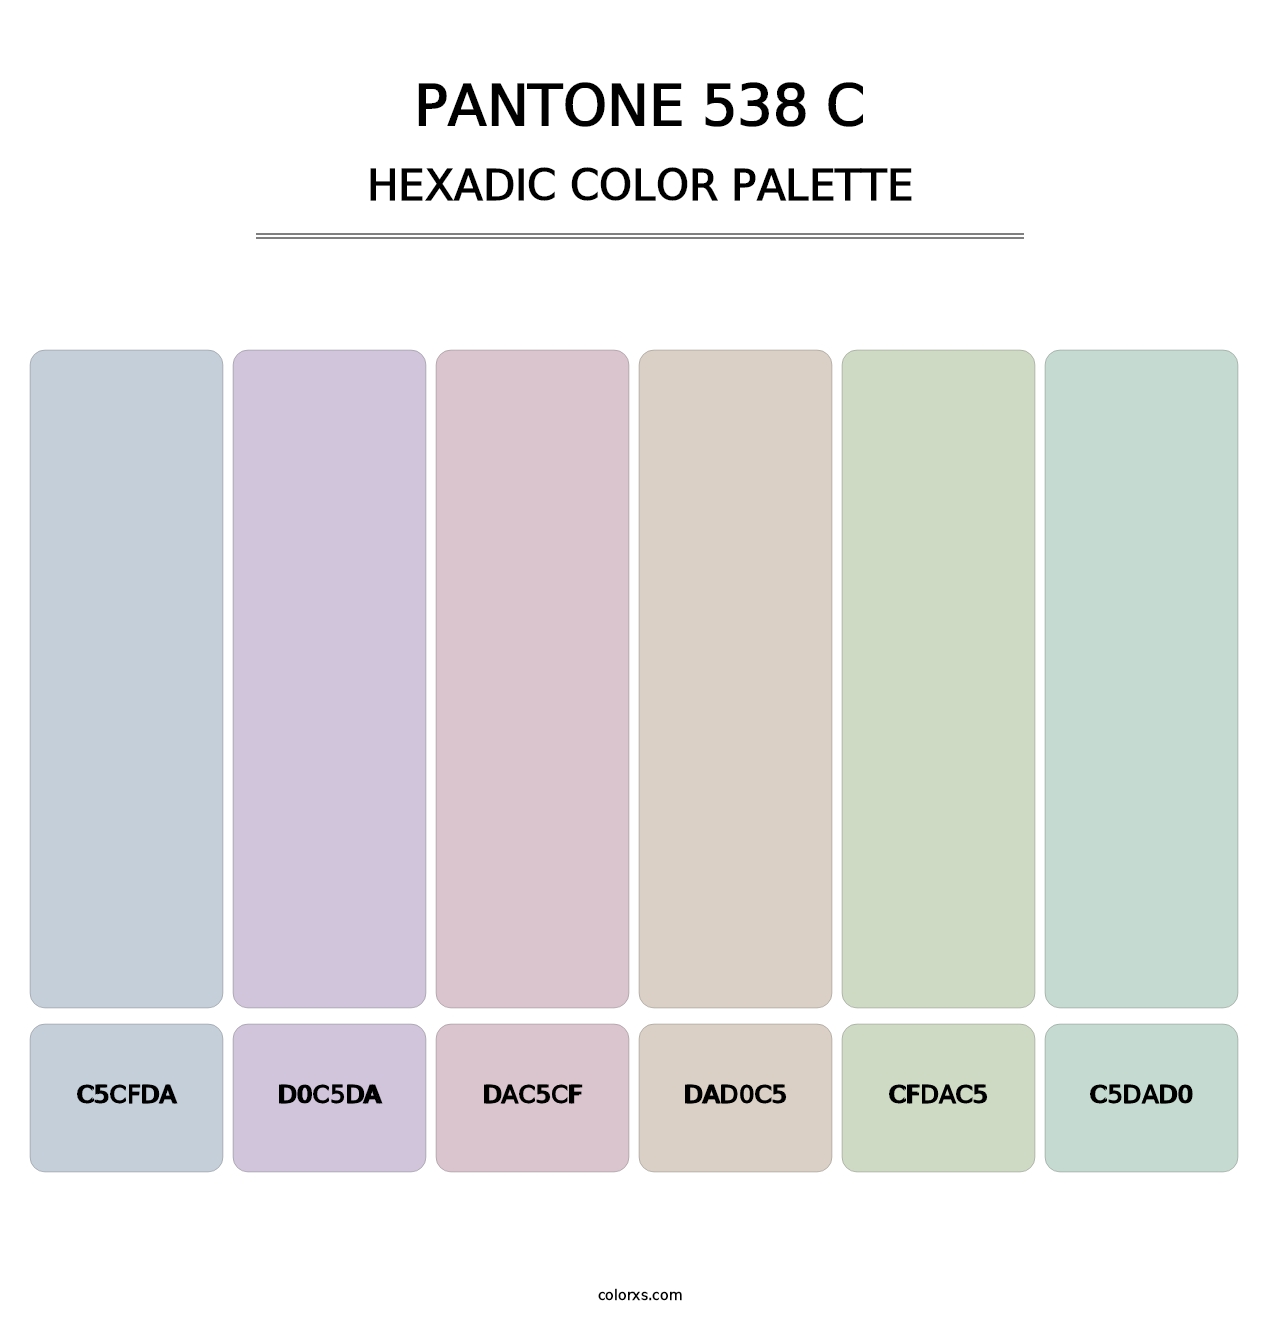 PANTONE 538 C - Hexadic Color Palette